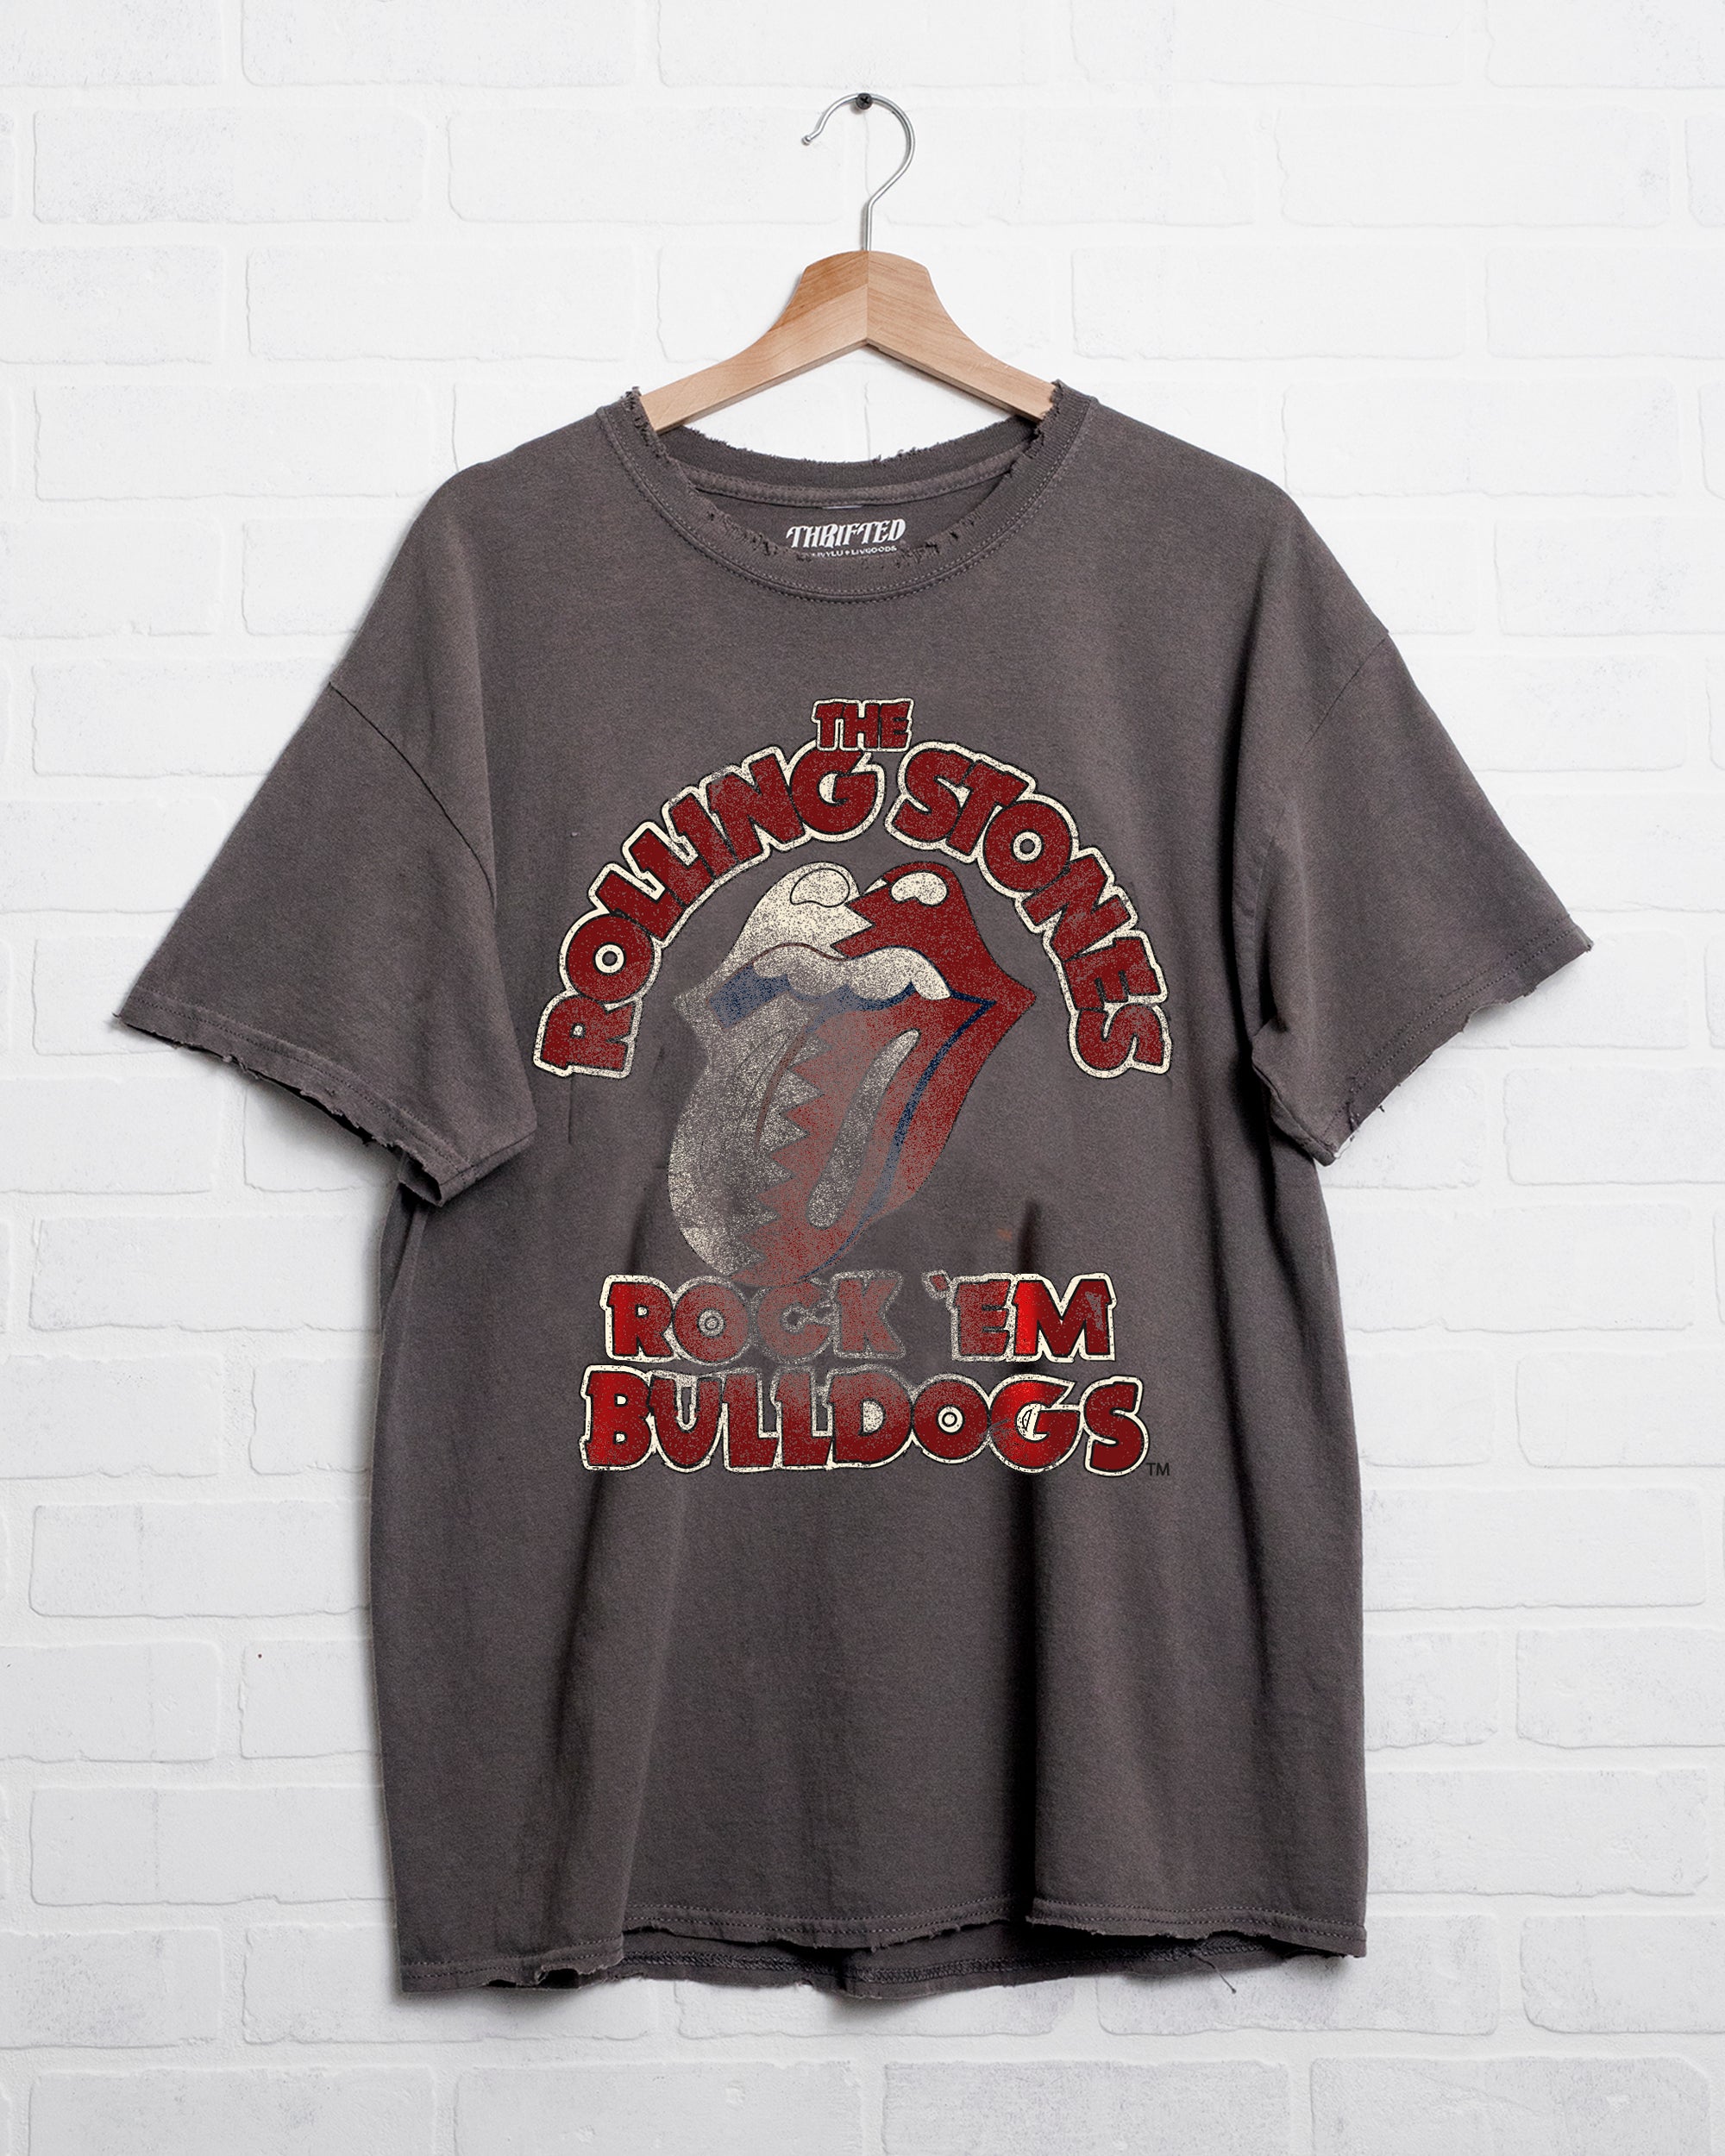 Rolling Stones Rock 'Em MSU Bulldogs Charcoal Thrifted Tee - shoplivylu